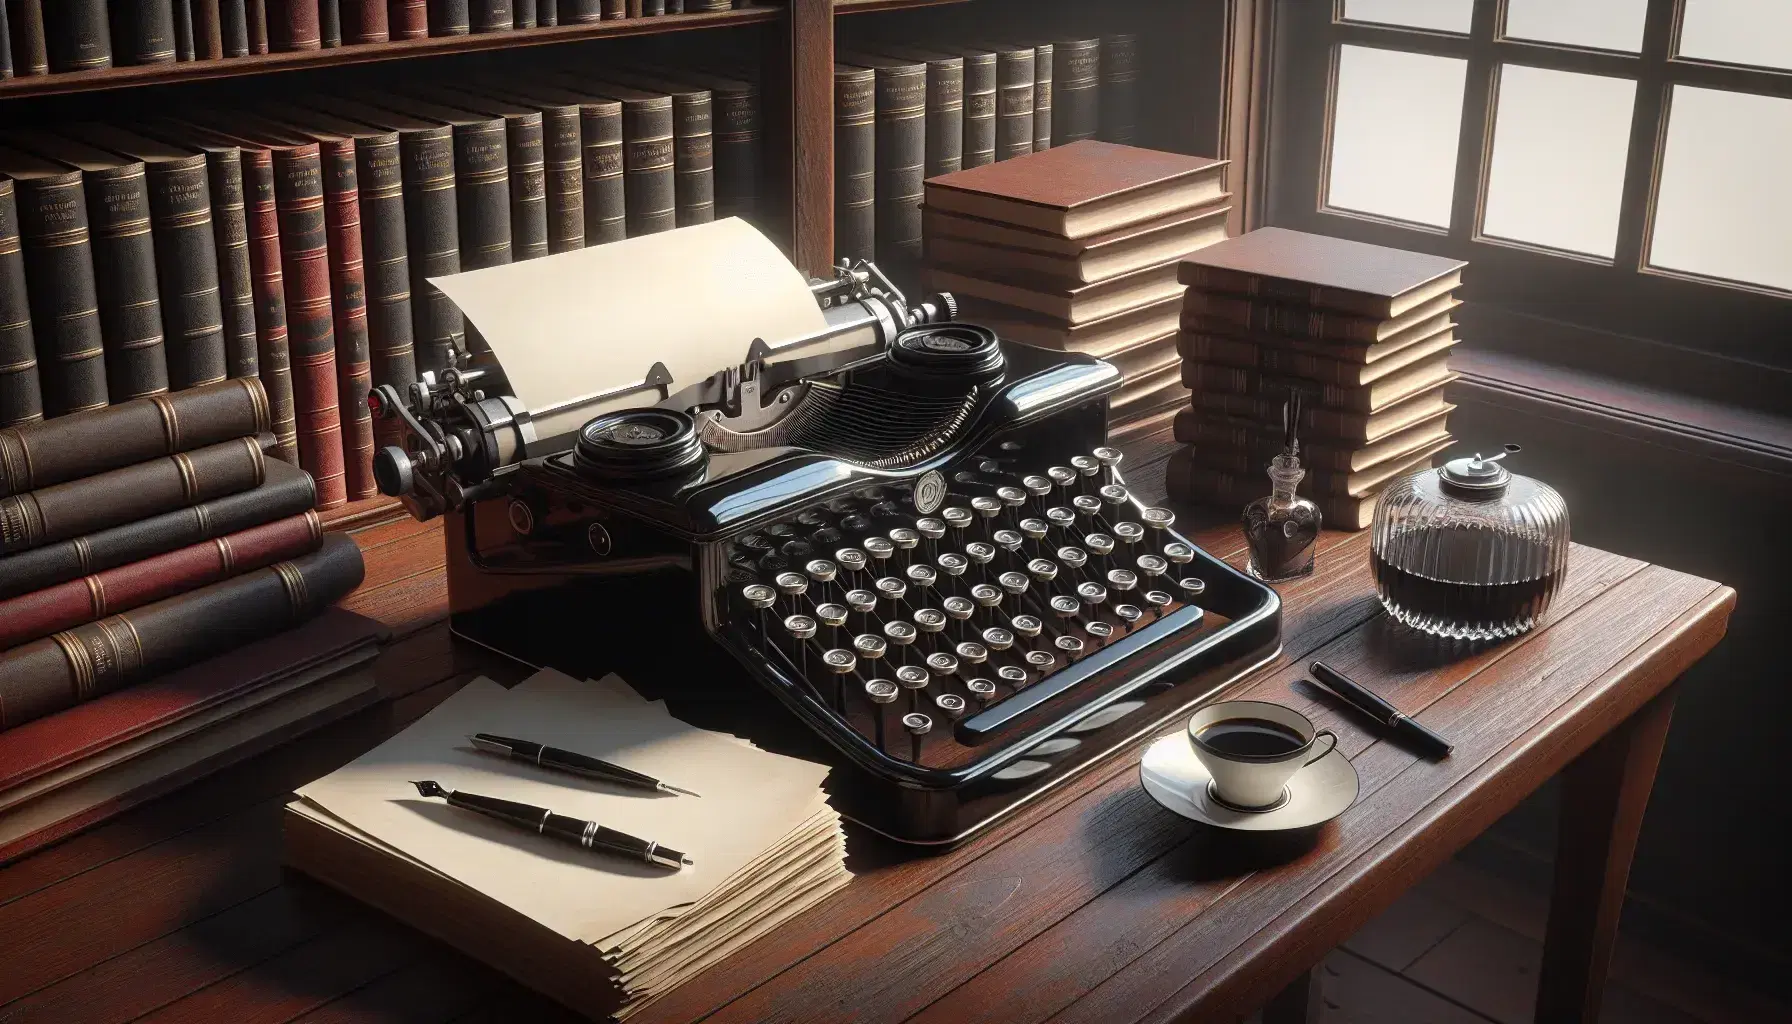 Máquina de escribir antigua con teclas blancas sobre mesa de madera, junto a tintero, pluma y taza de café, con estantería de libros al fondo.